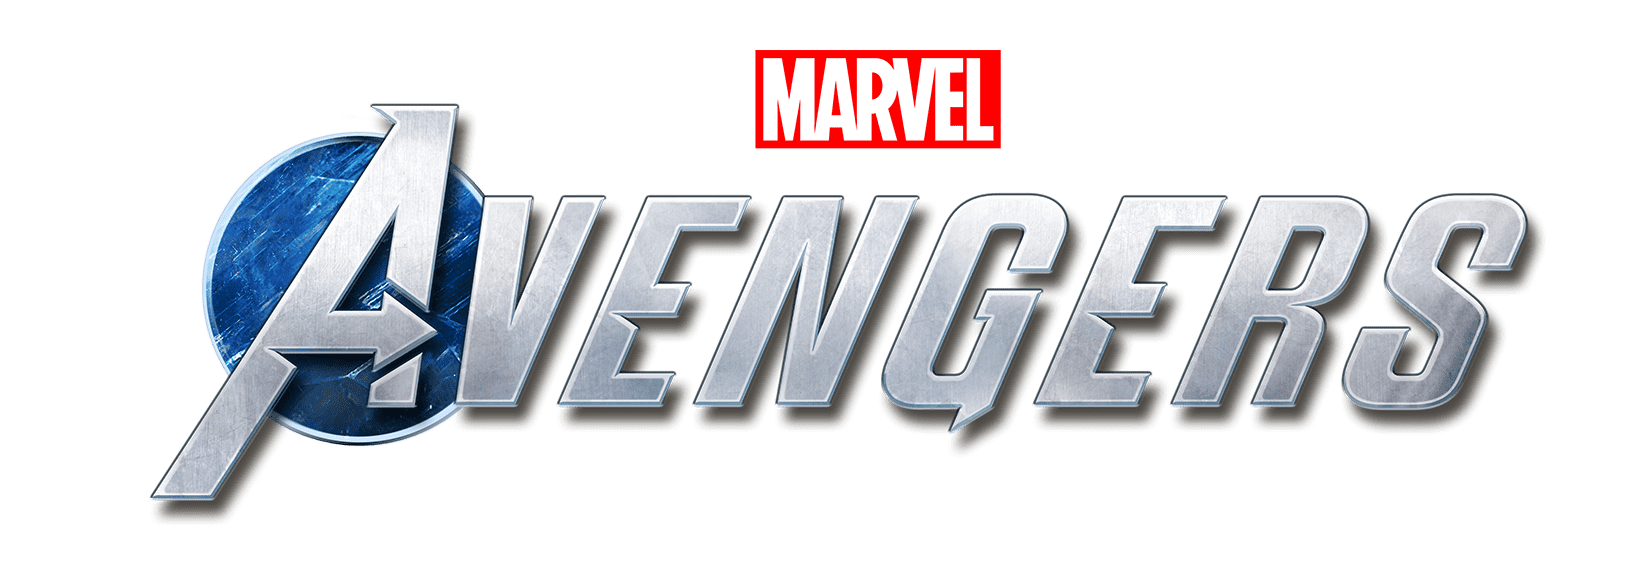 Marvel Avengers Logo PNG Picture pngteam.com